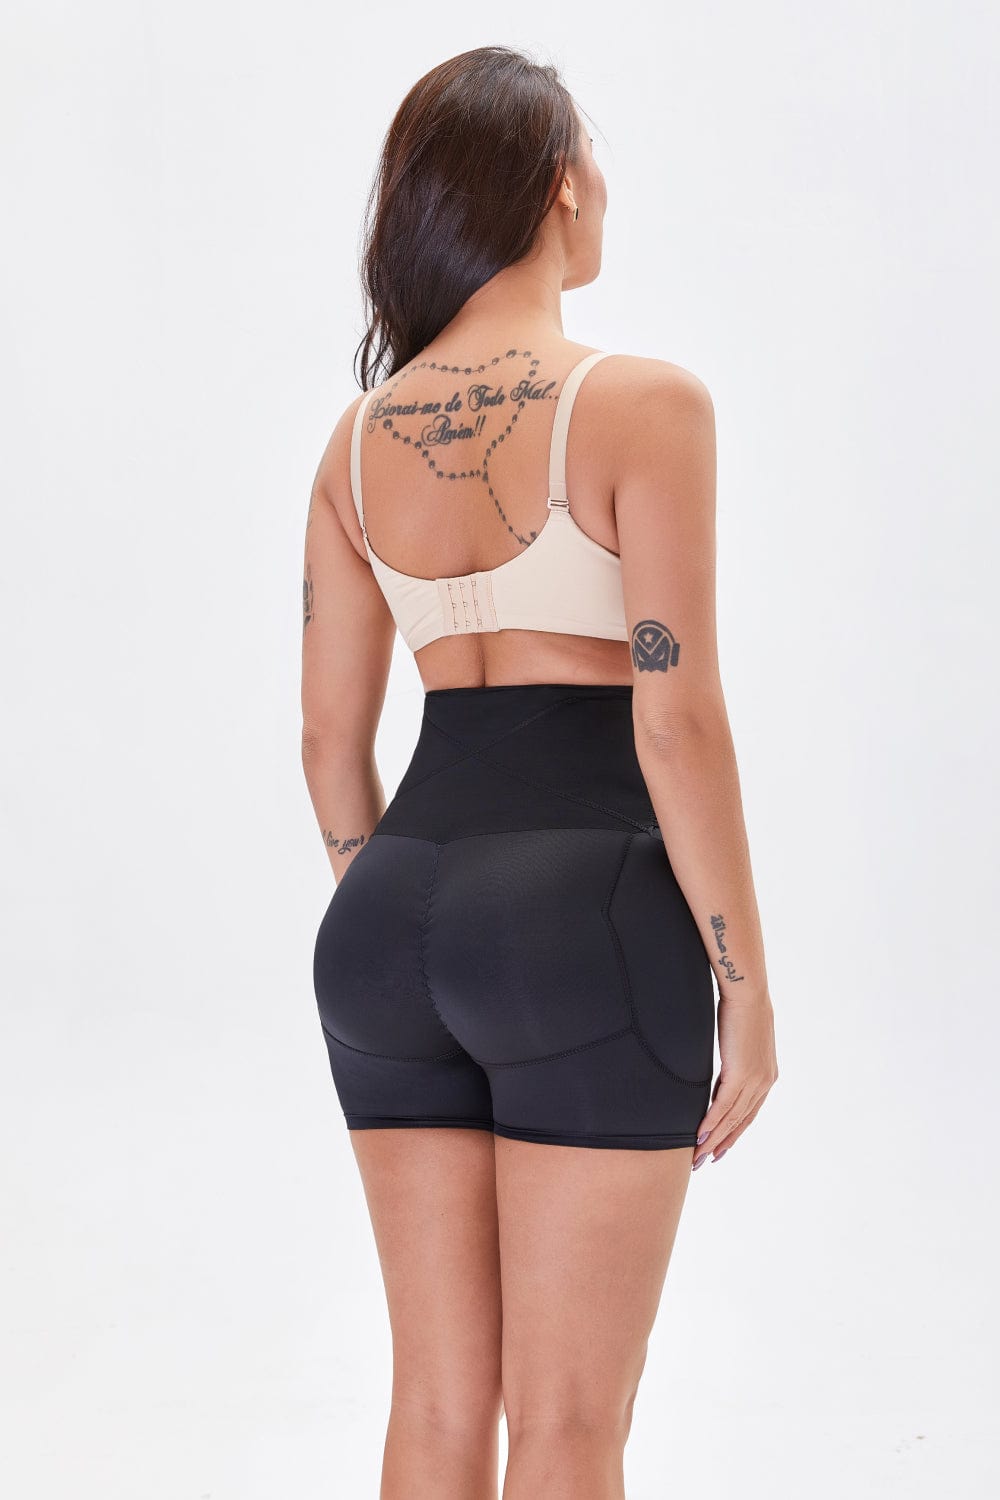 Full Size Hip Lifting Shaping Shorts - Body By J'ne